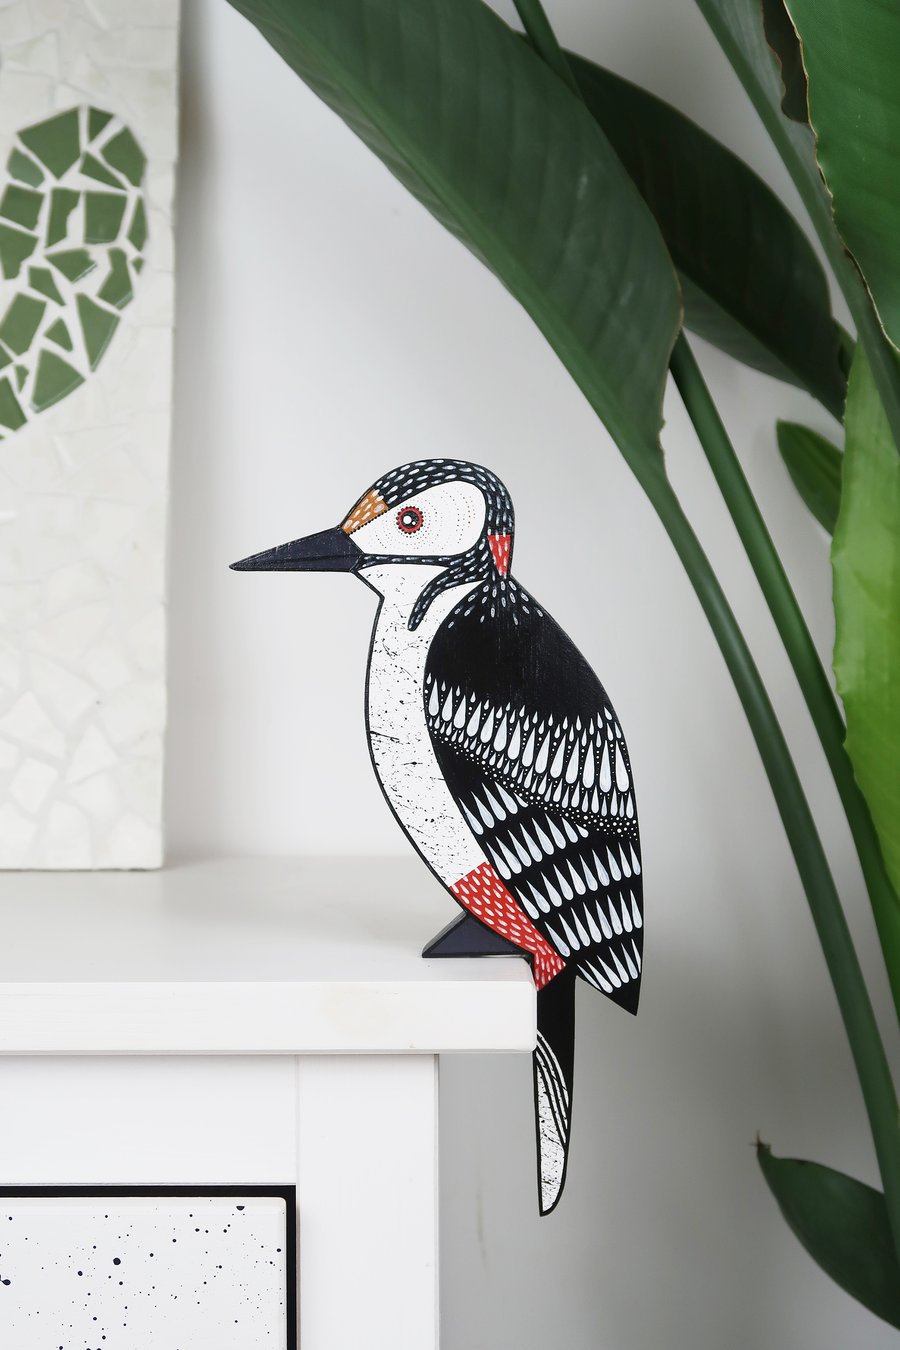 Woodpecker door topper, british bird wall art, hand painted wooden bird.